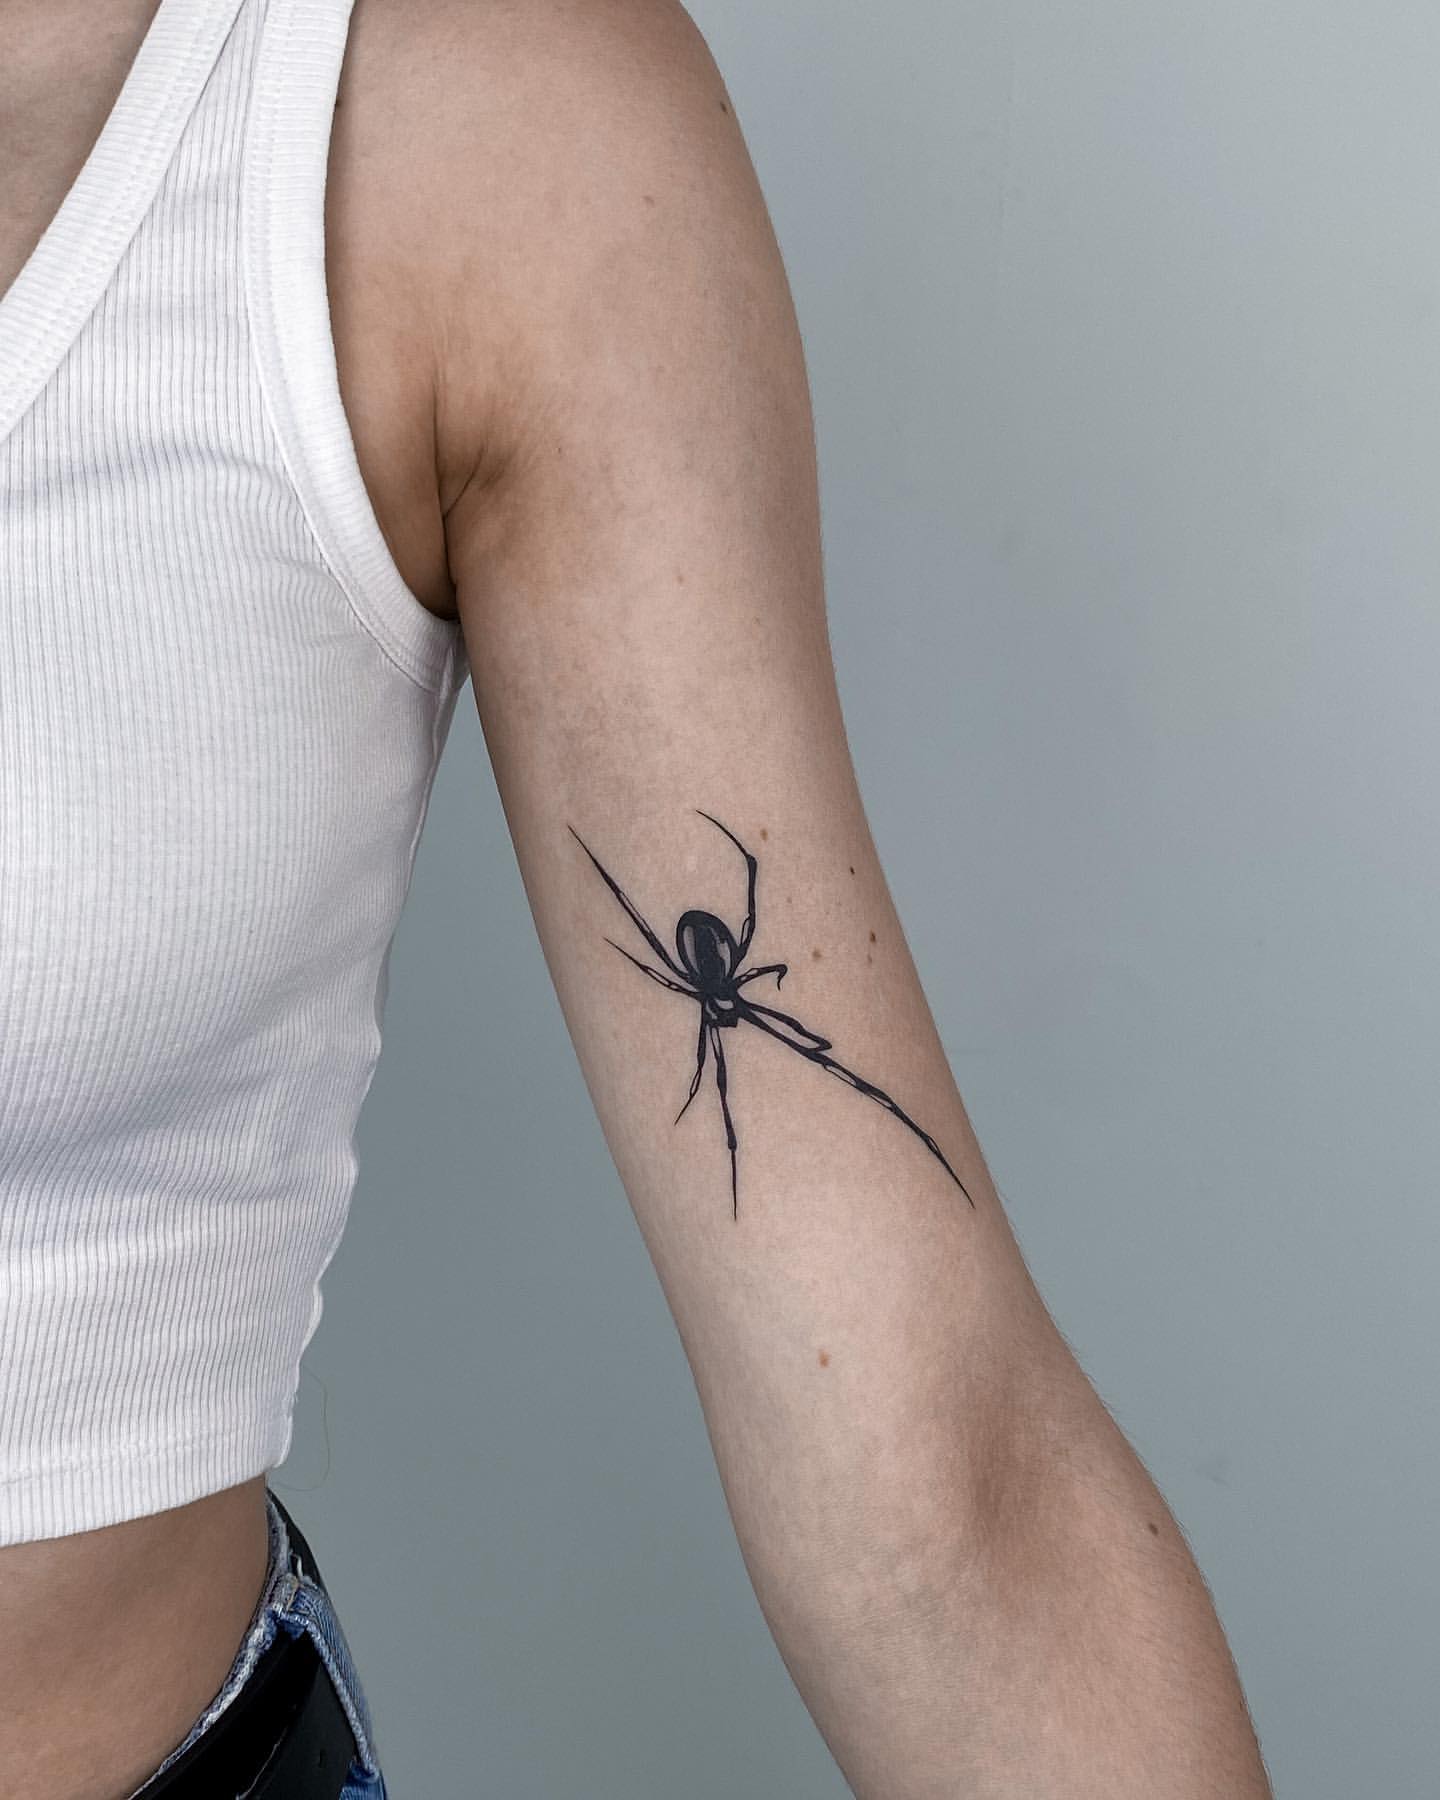 Spider tattoos for women